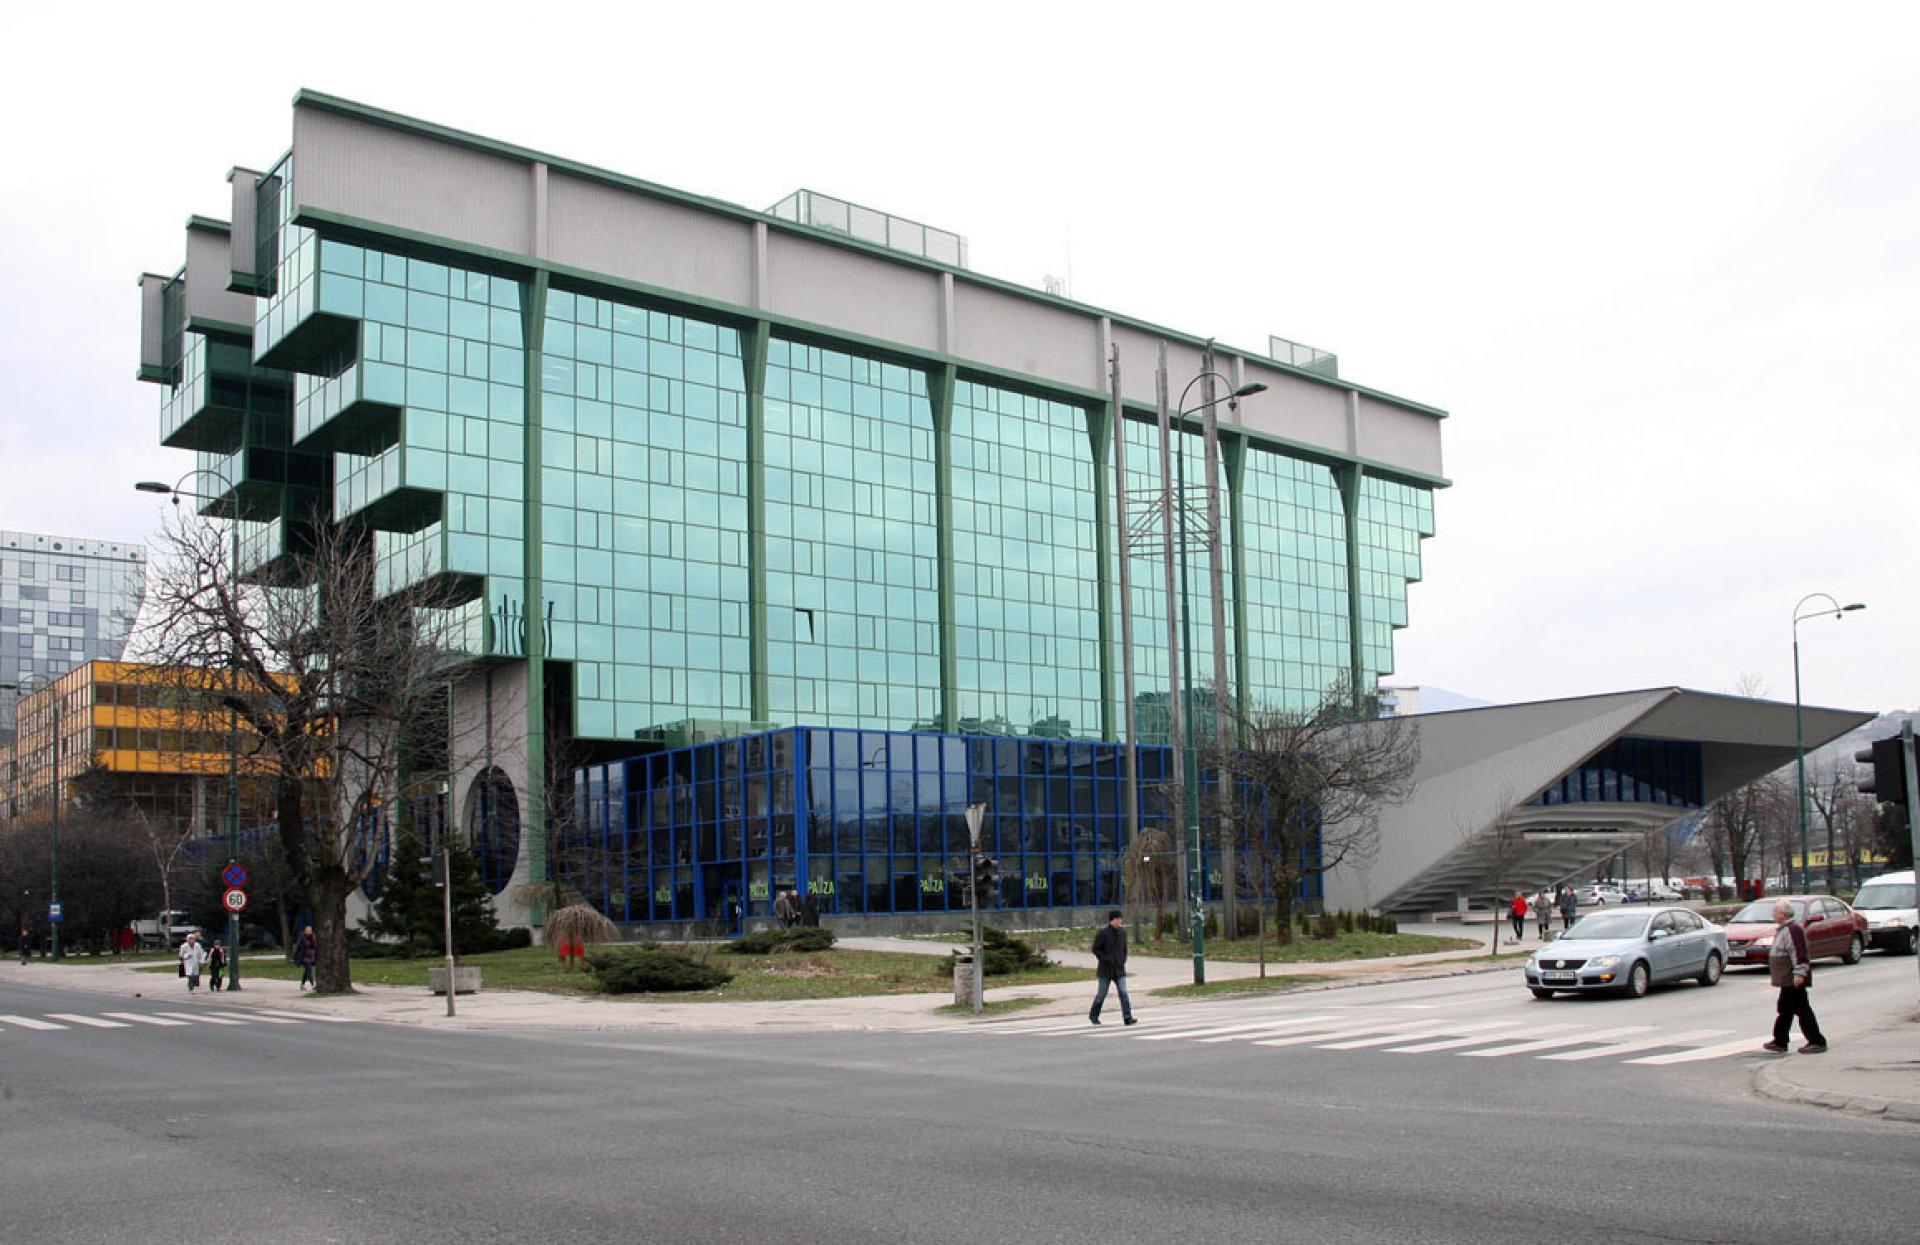 Elektroprivreda served as the headquarters of the company for the power distribution of Bosnia and Herzegovina. | Photo © Zoran Kanlić